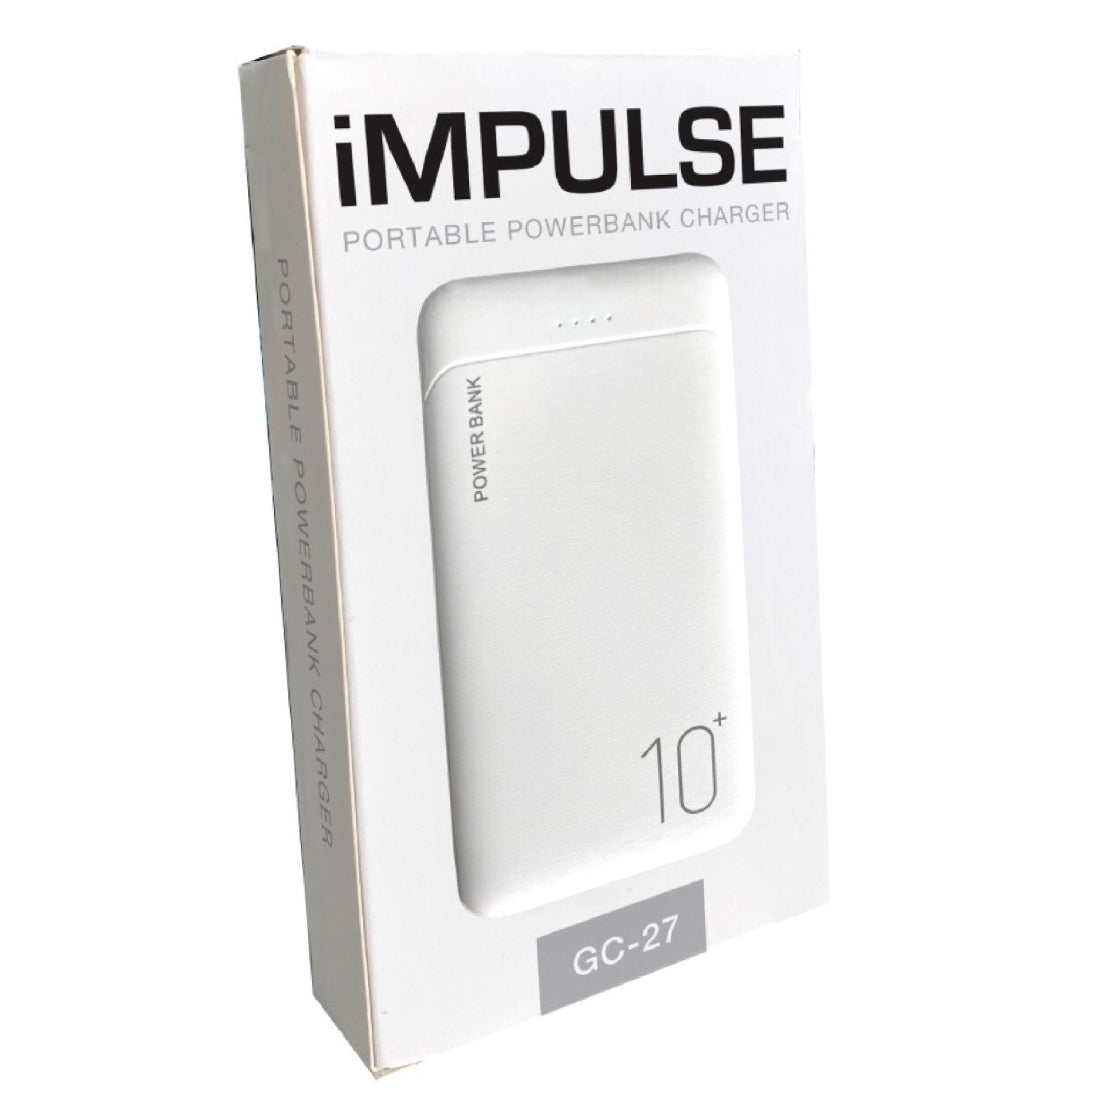 Impulse Portable Powerbank Charger White